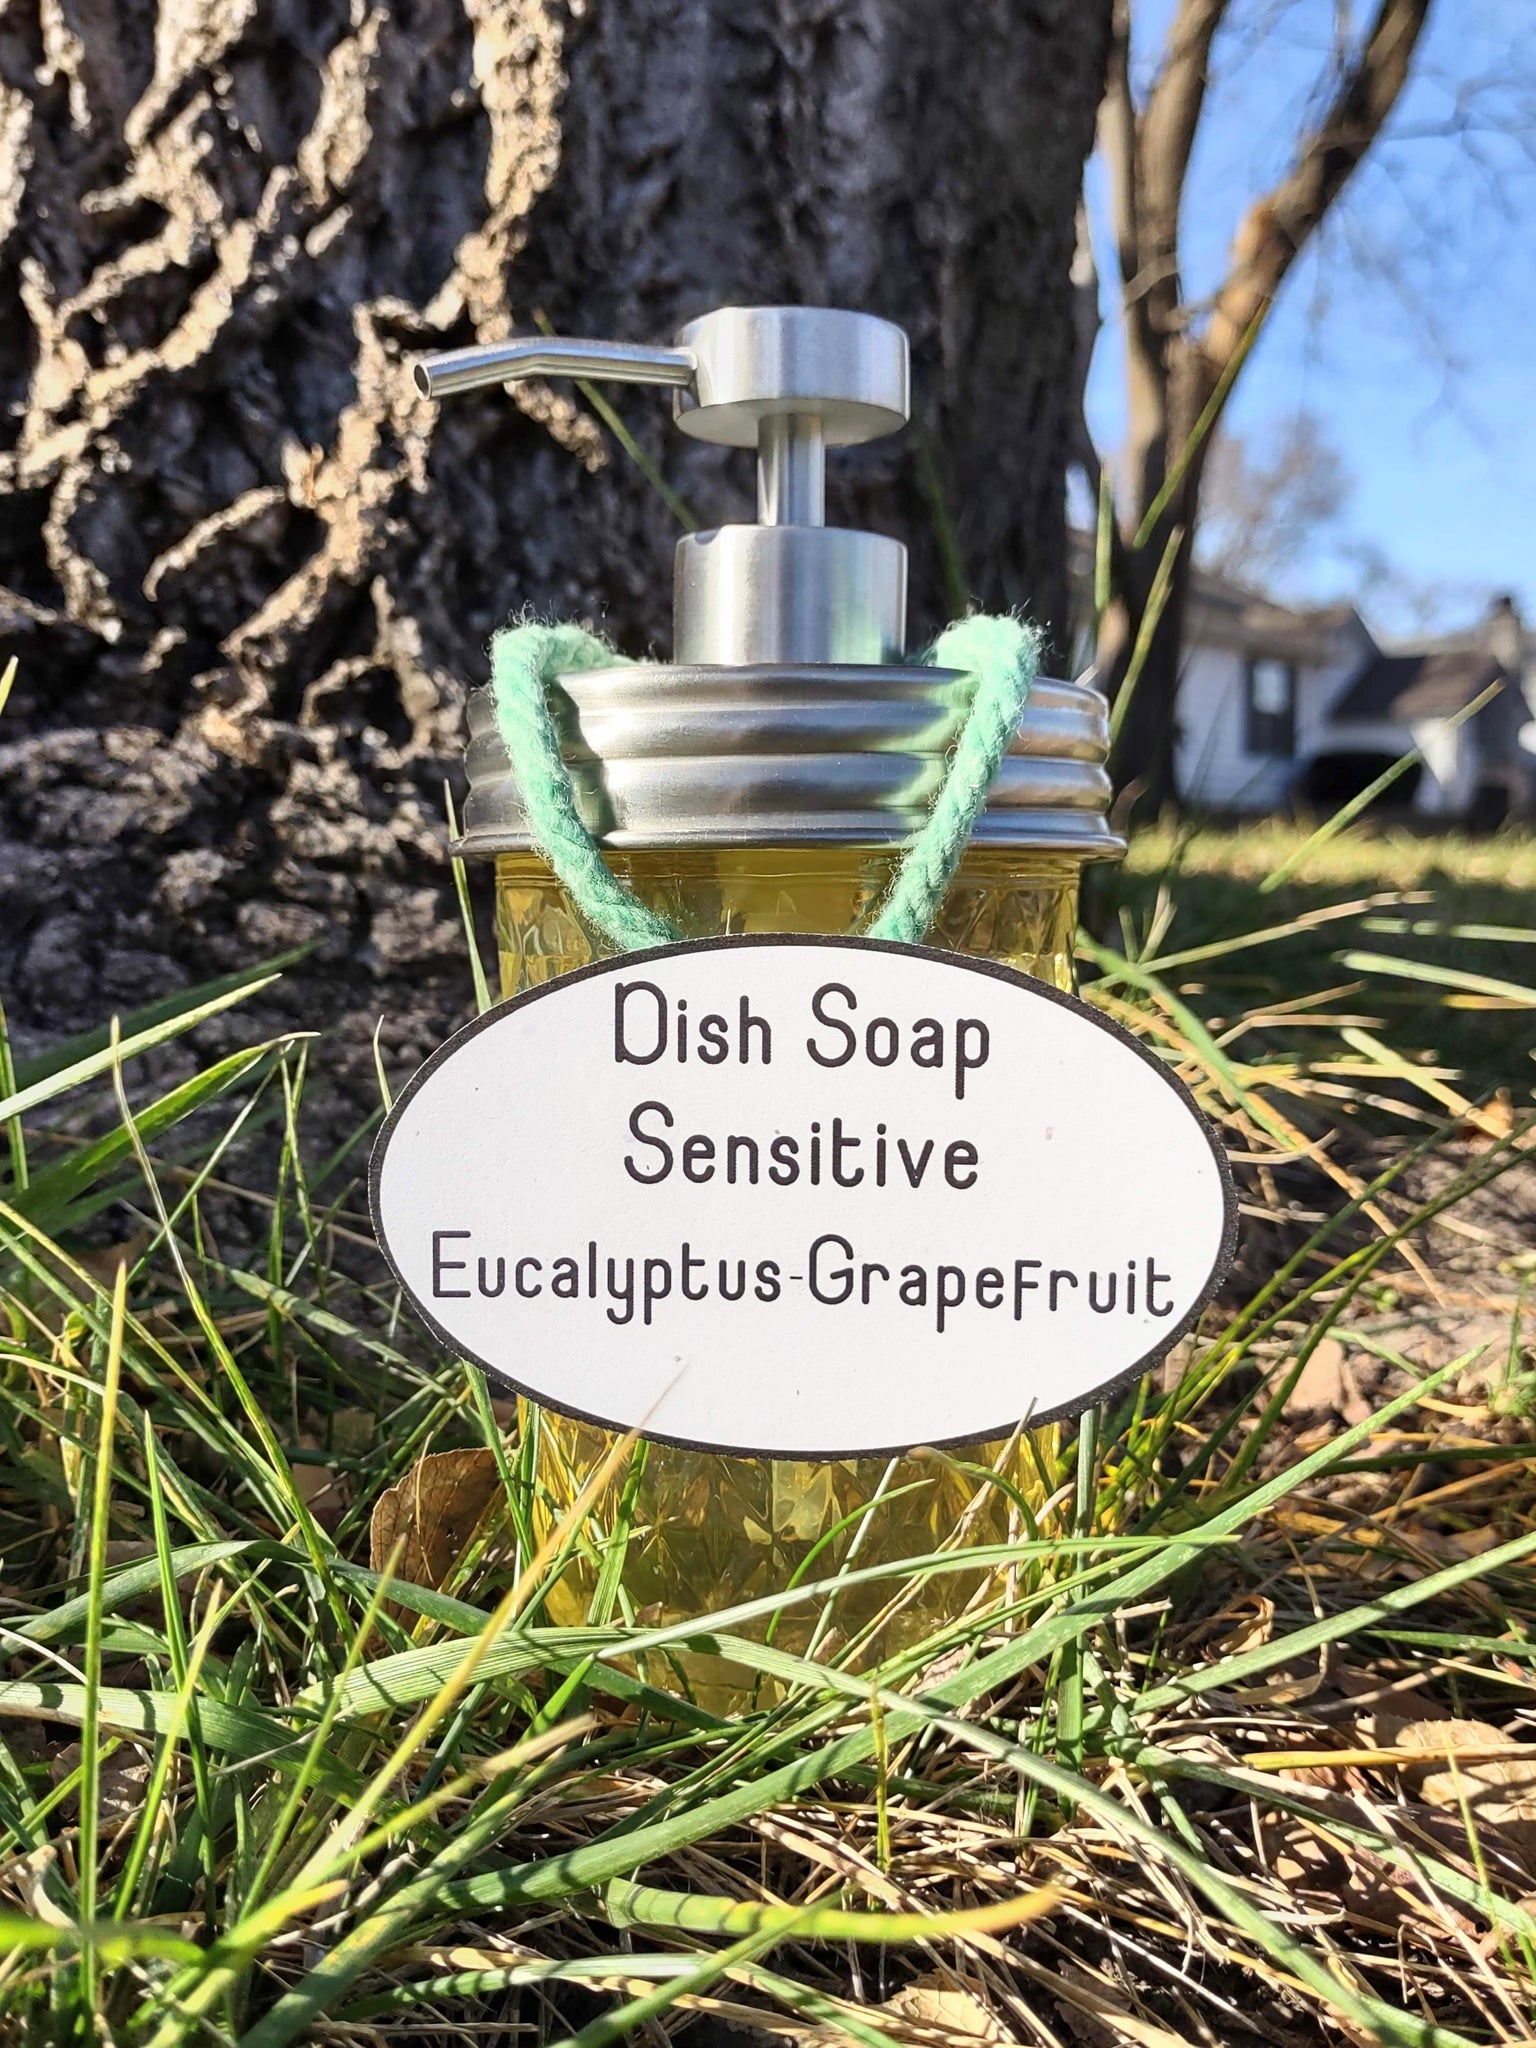 Dish Soap Grapefruit Eucalyptus Sensitive